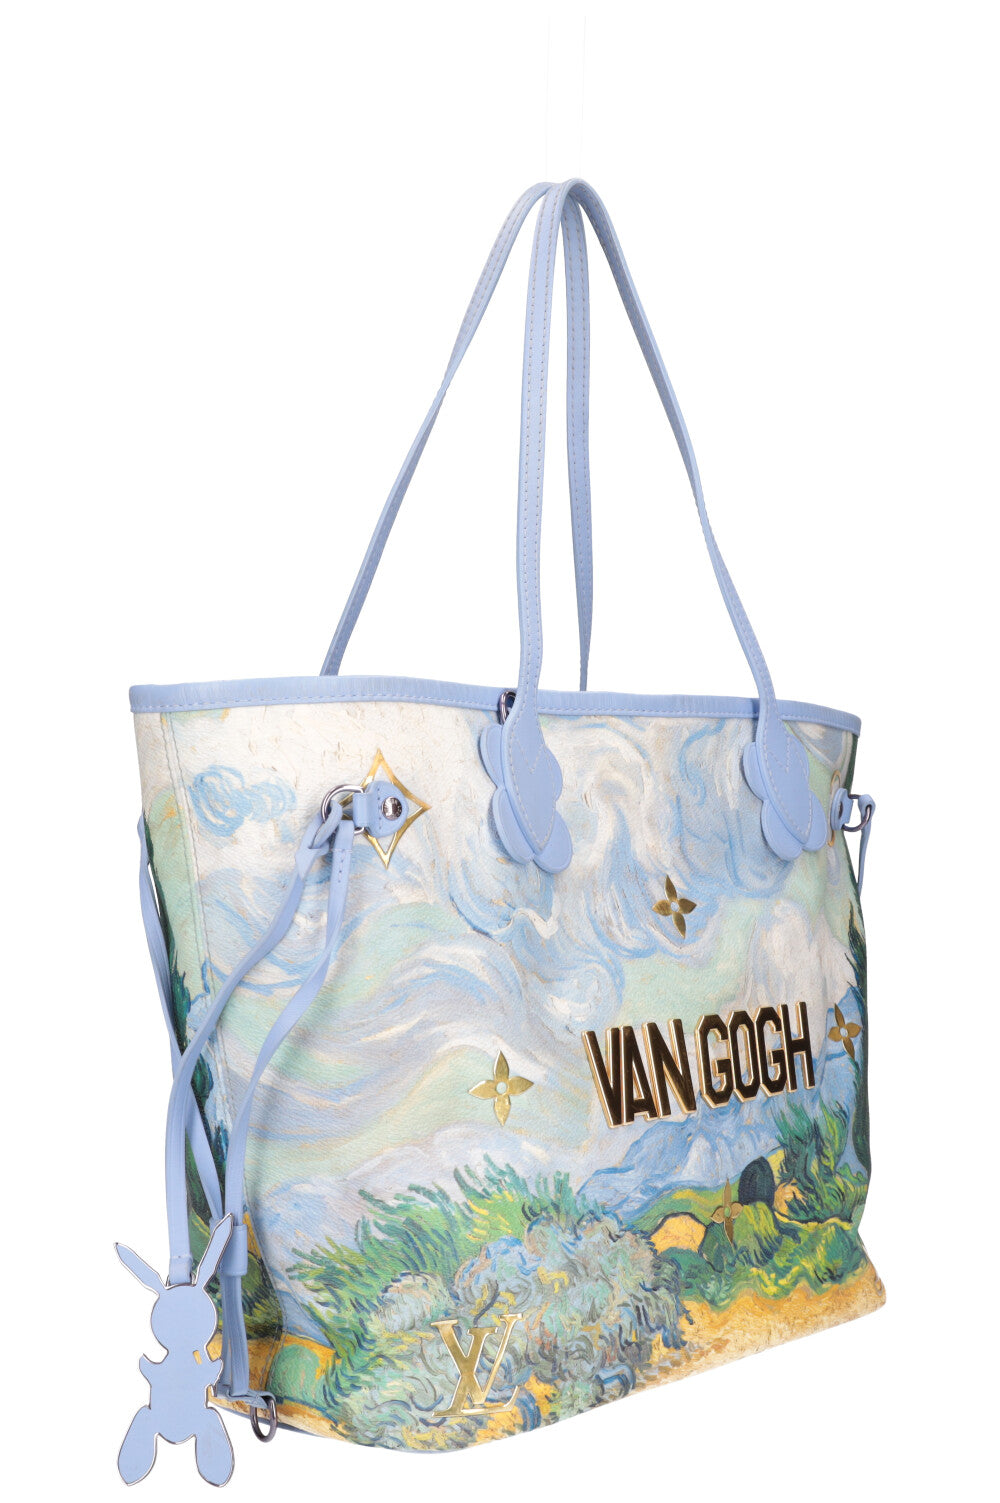 Sac Vuitton Neverfull Jeff Koons Van Gogh - Vinted